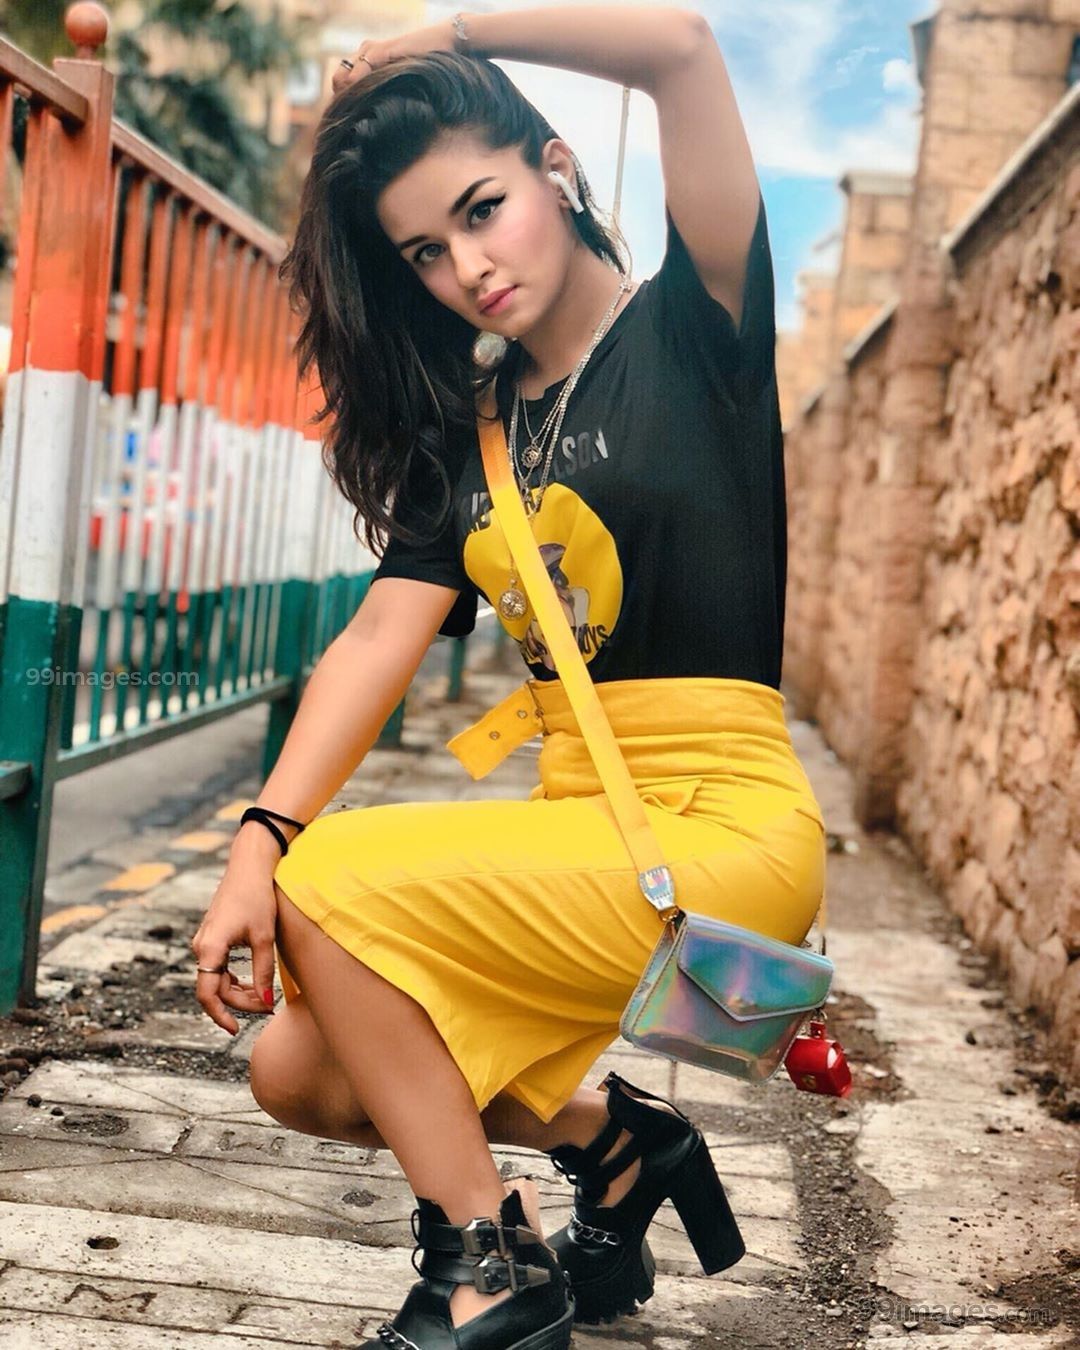 beautiful girl hd wallpapers for mobile,baseball bat,yellow,leg,photo shoot,footwear